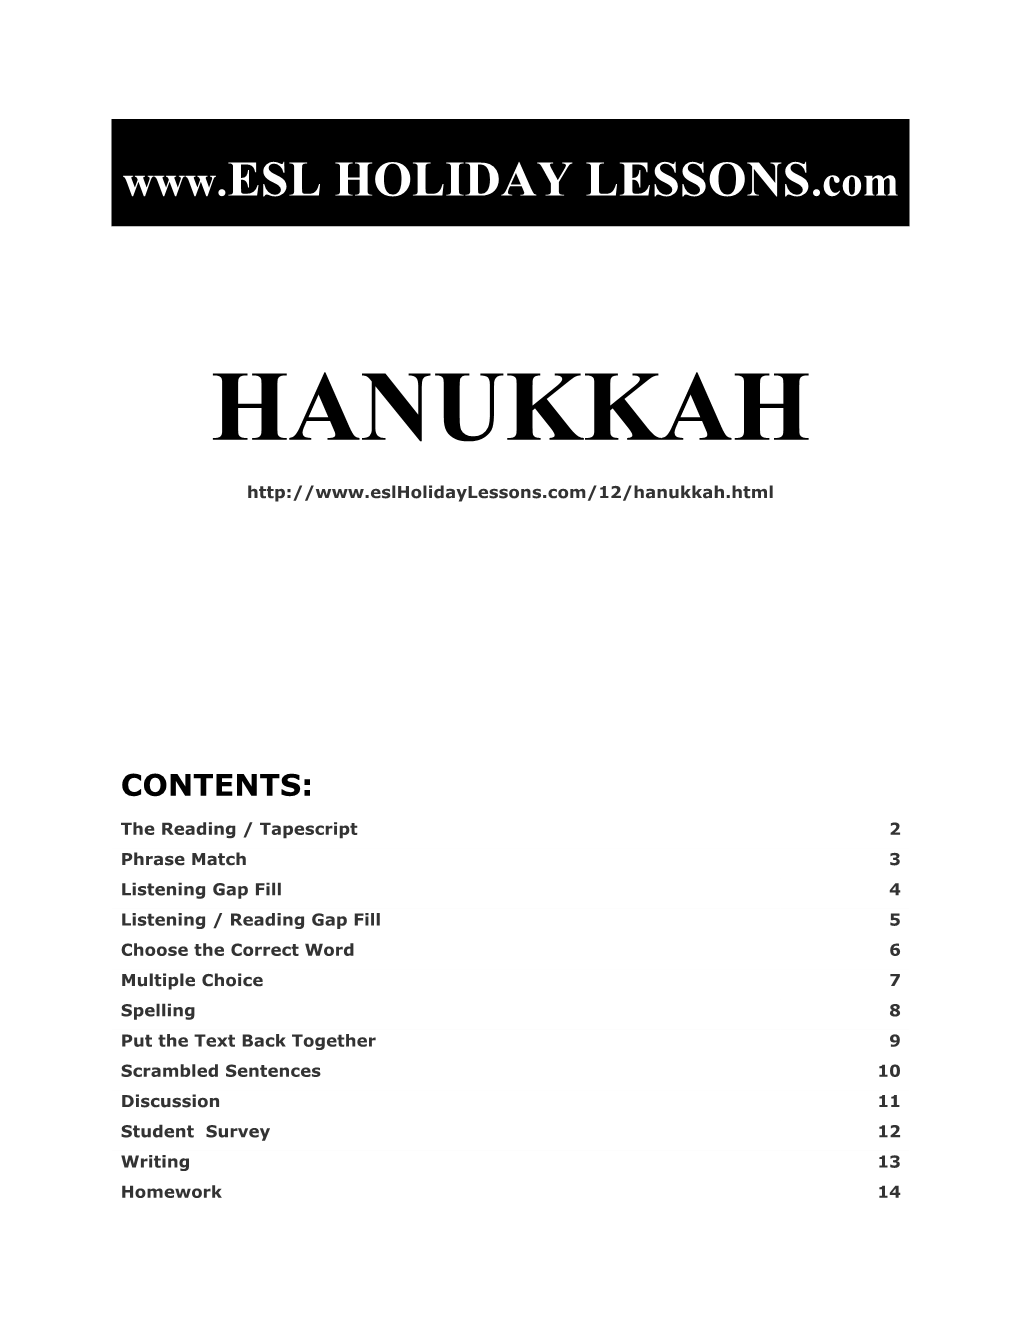 Holiday Lessons - Hanukkah